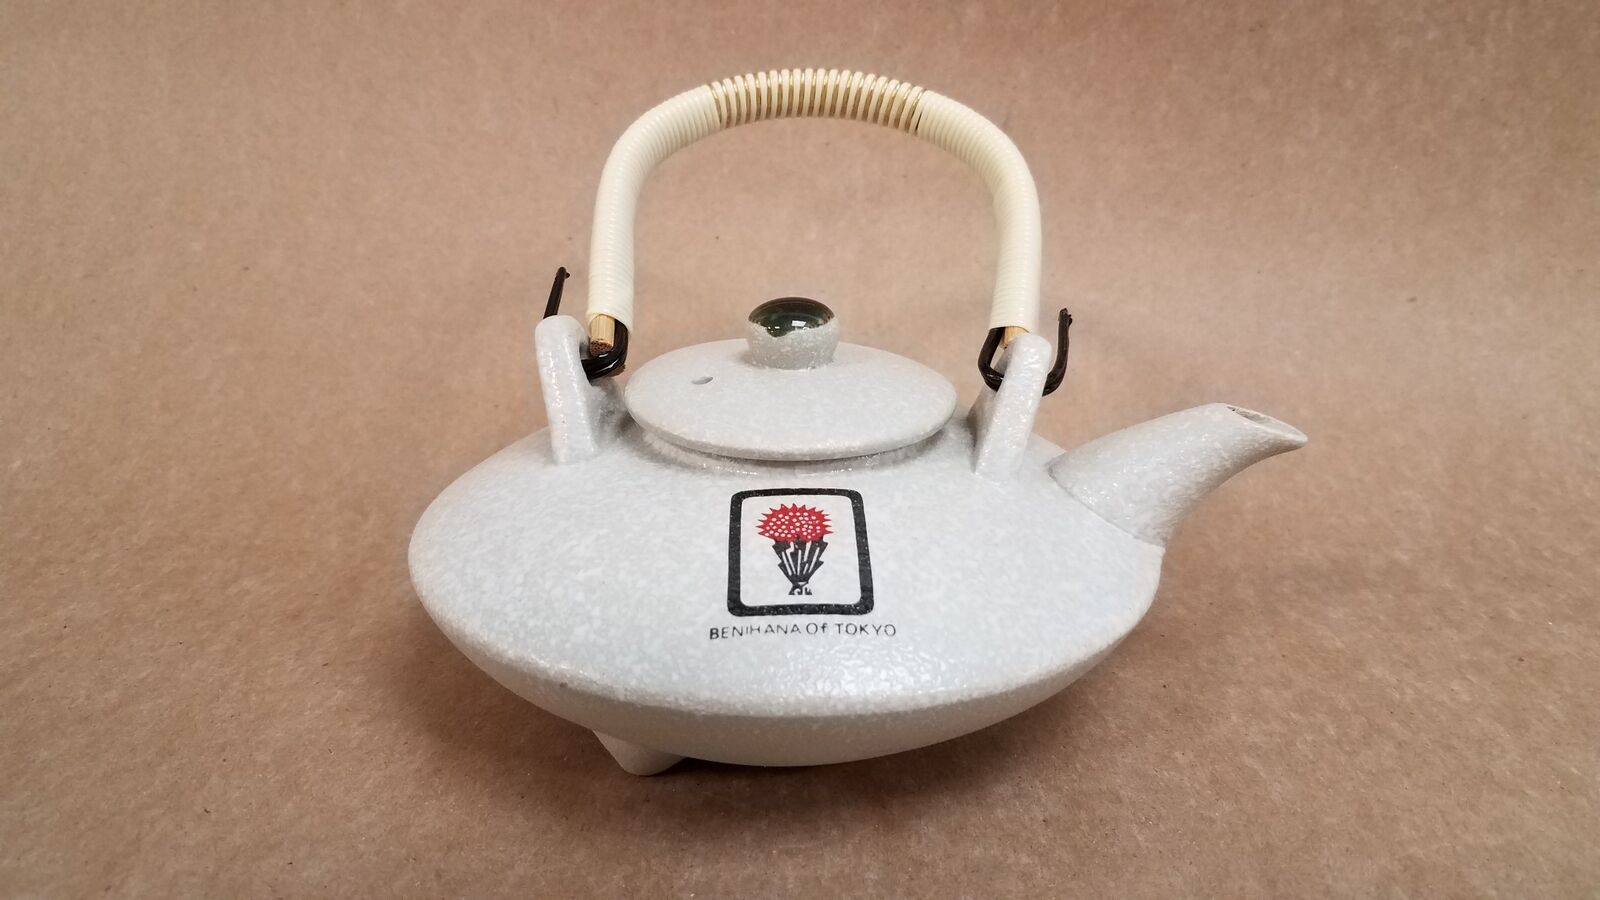 Vintage Benihana of Tokyo Ceramic Teapot